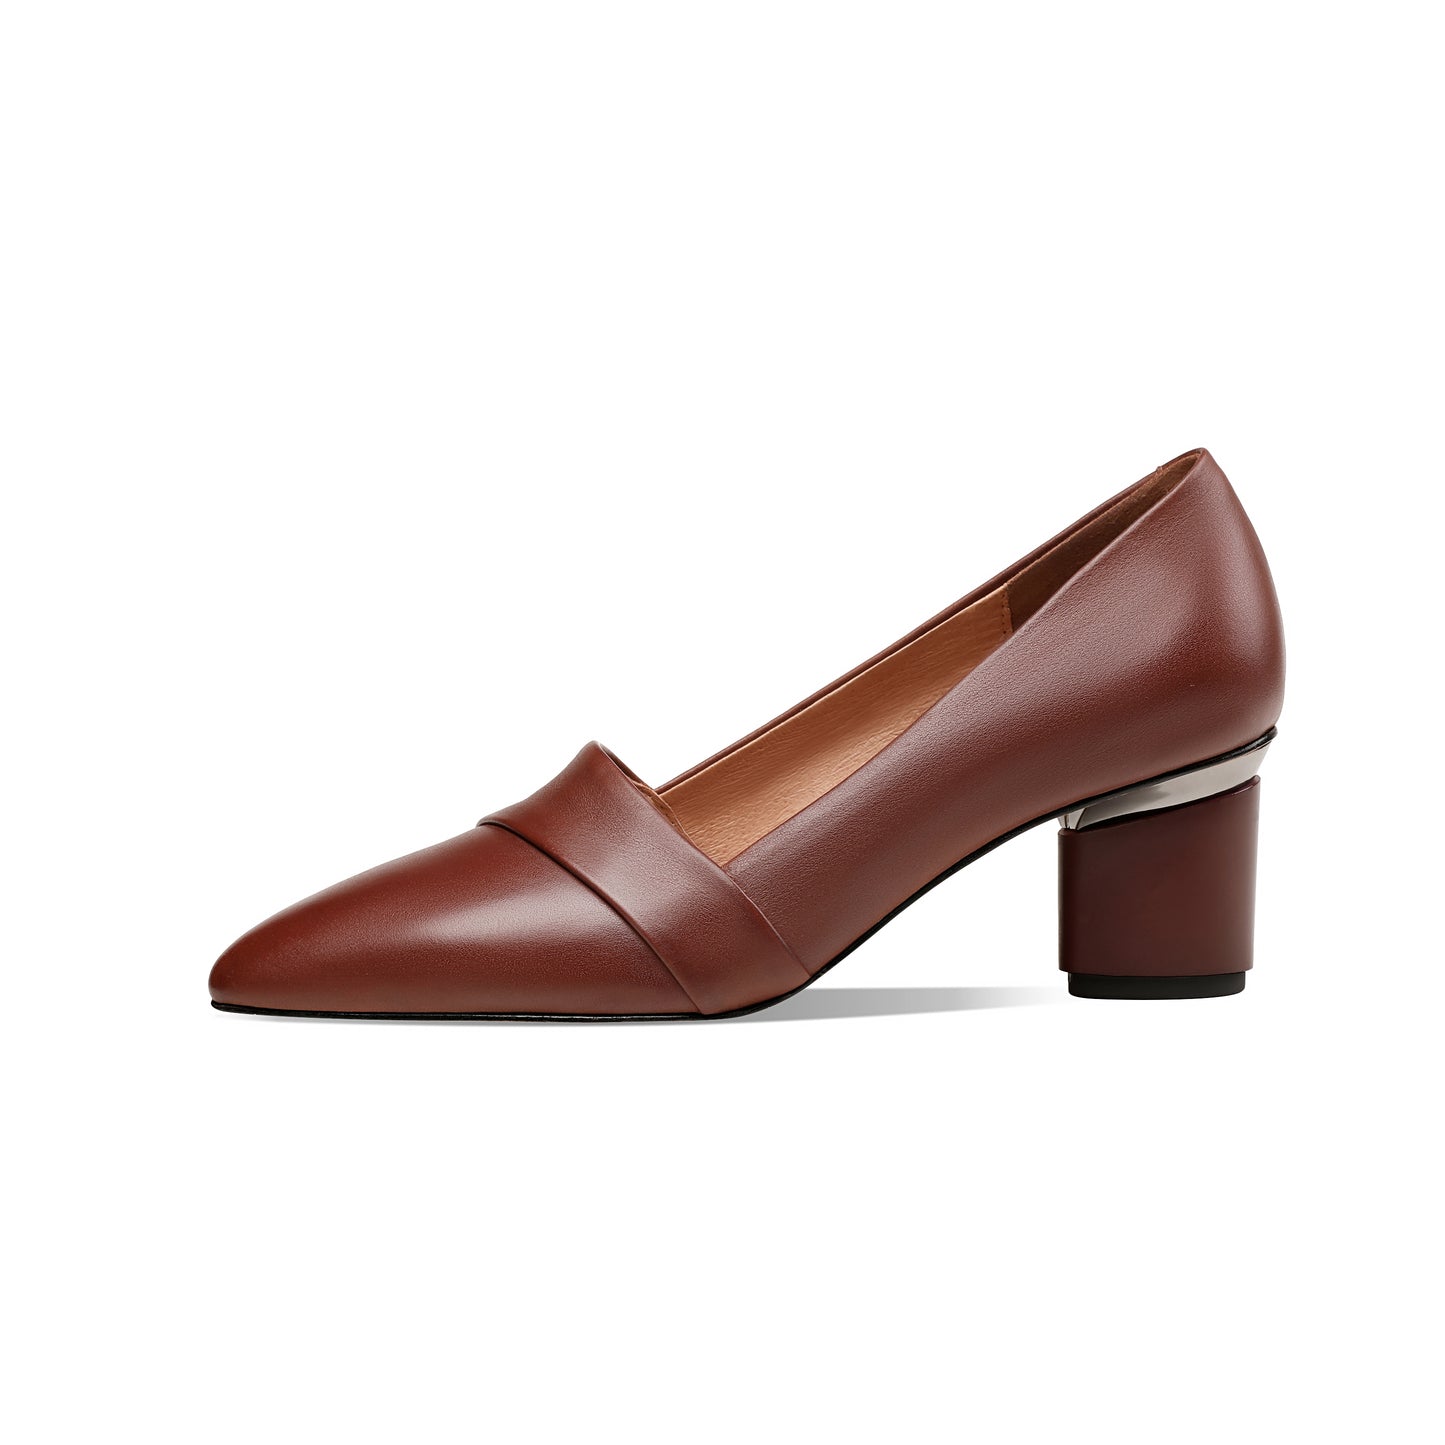 TinaCus Women's Genuine Leather Pointed Toe Handmade Mid Heels Slip On Vintage Pumps Shoes